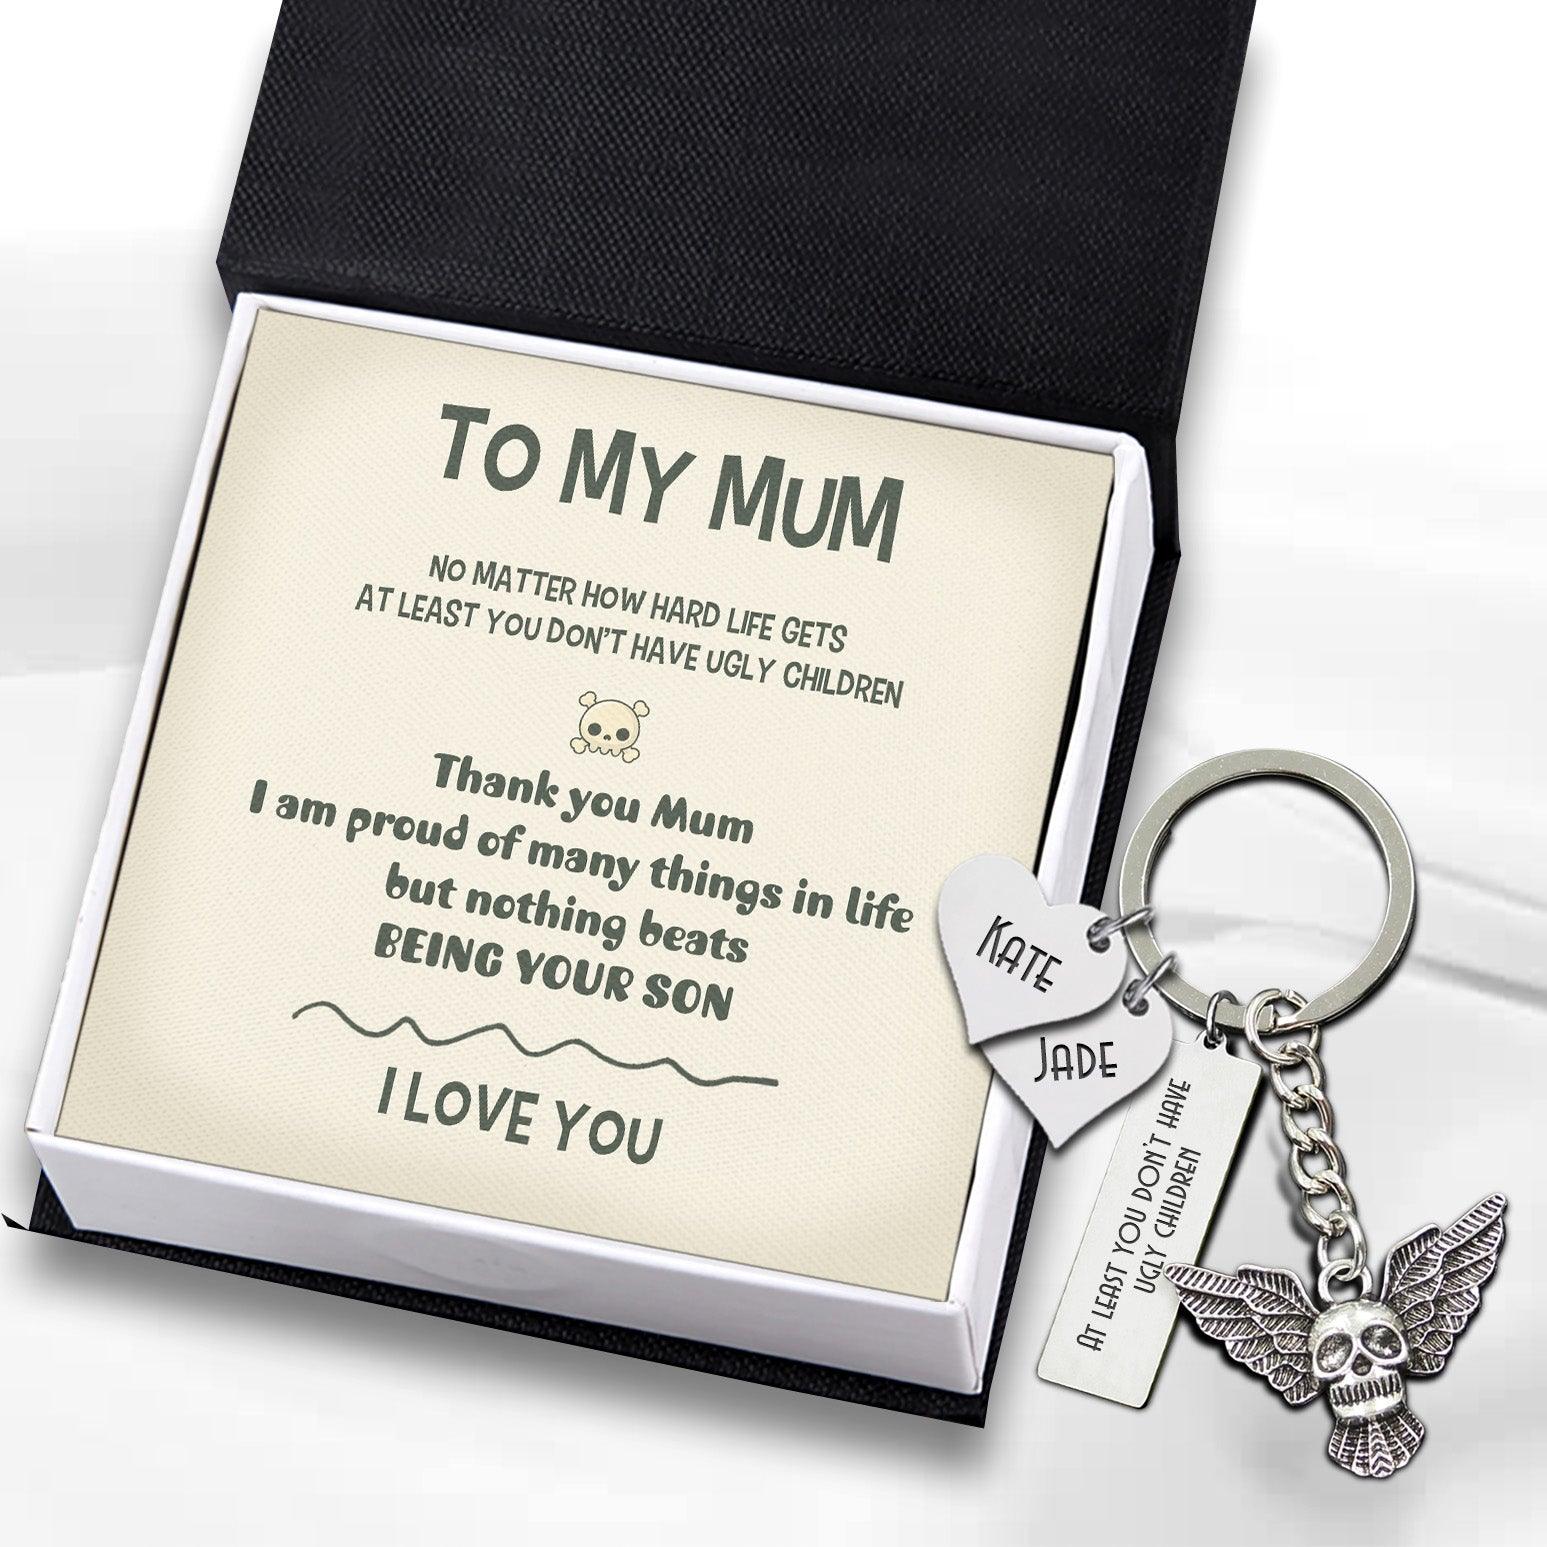 Personalised Fly Skull Keychain - Skull - From Son - To My Mum - I Love You - Augkem19003 - Gifts Holder